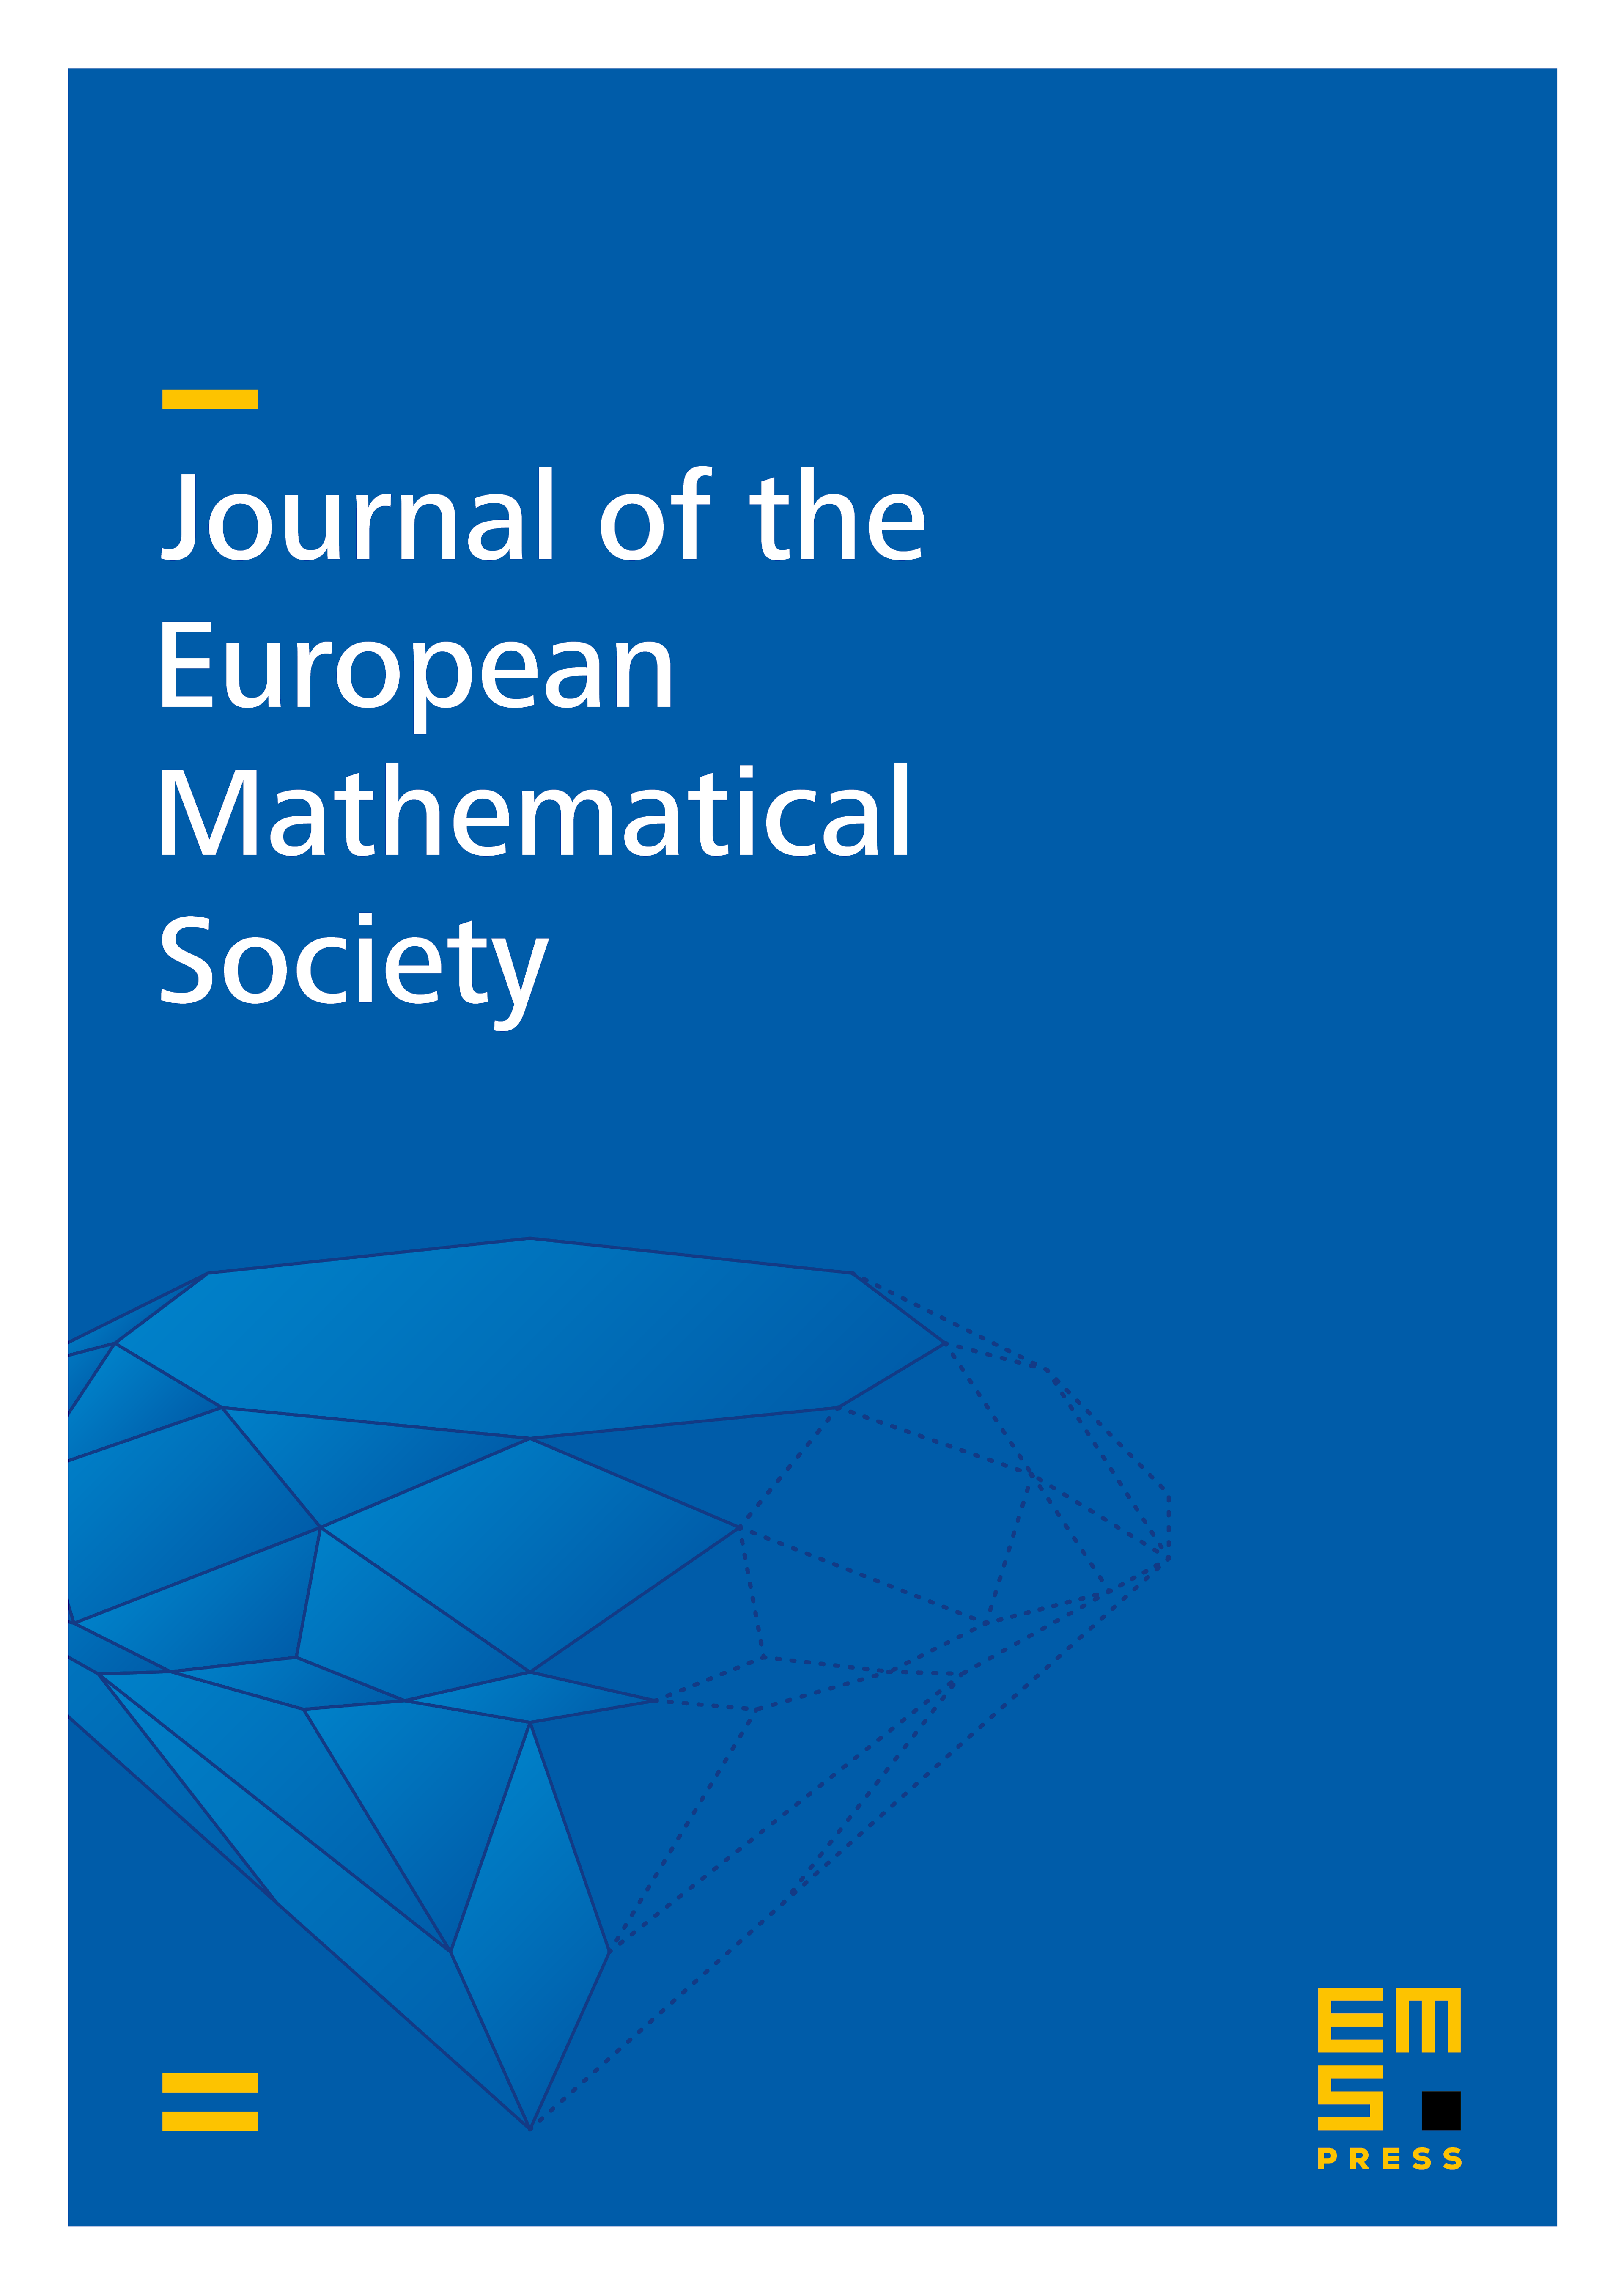 Erratum: J. Eur. Math. Soc. 1, 237-311 (1999) cover